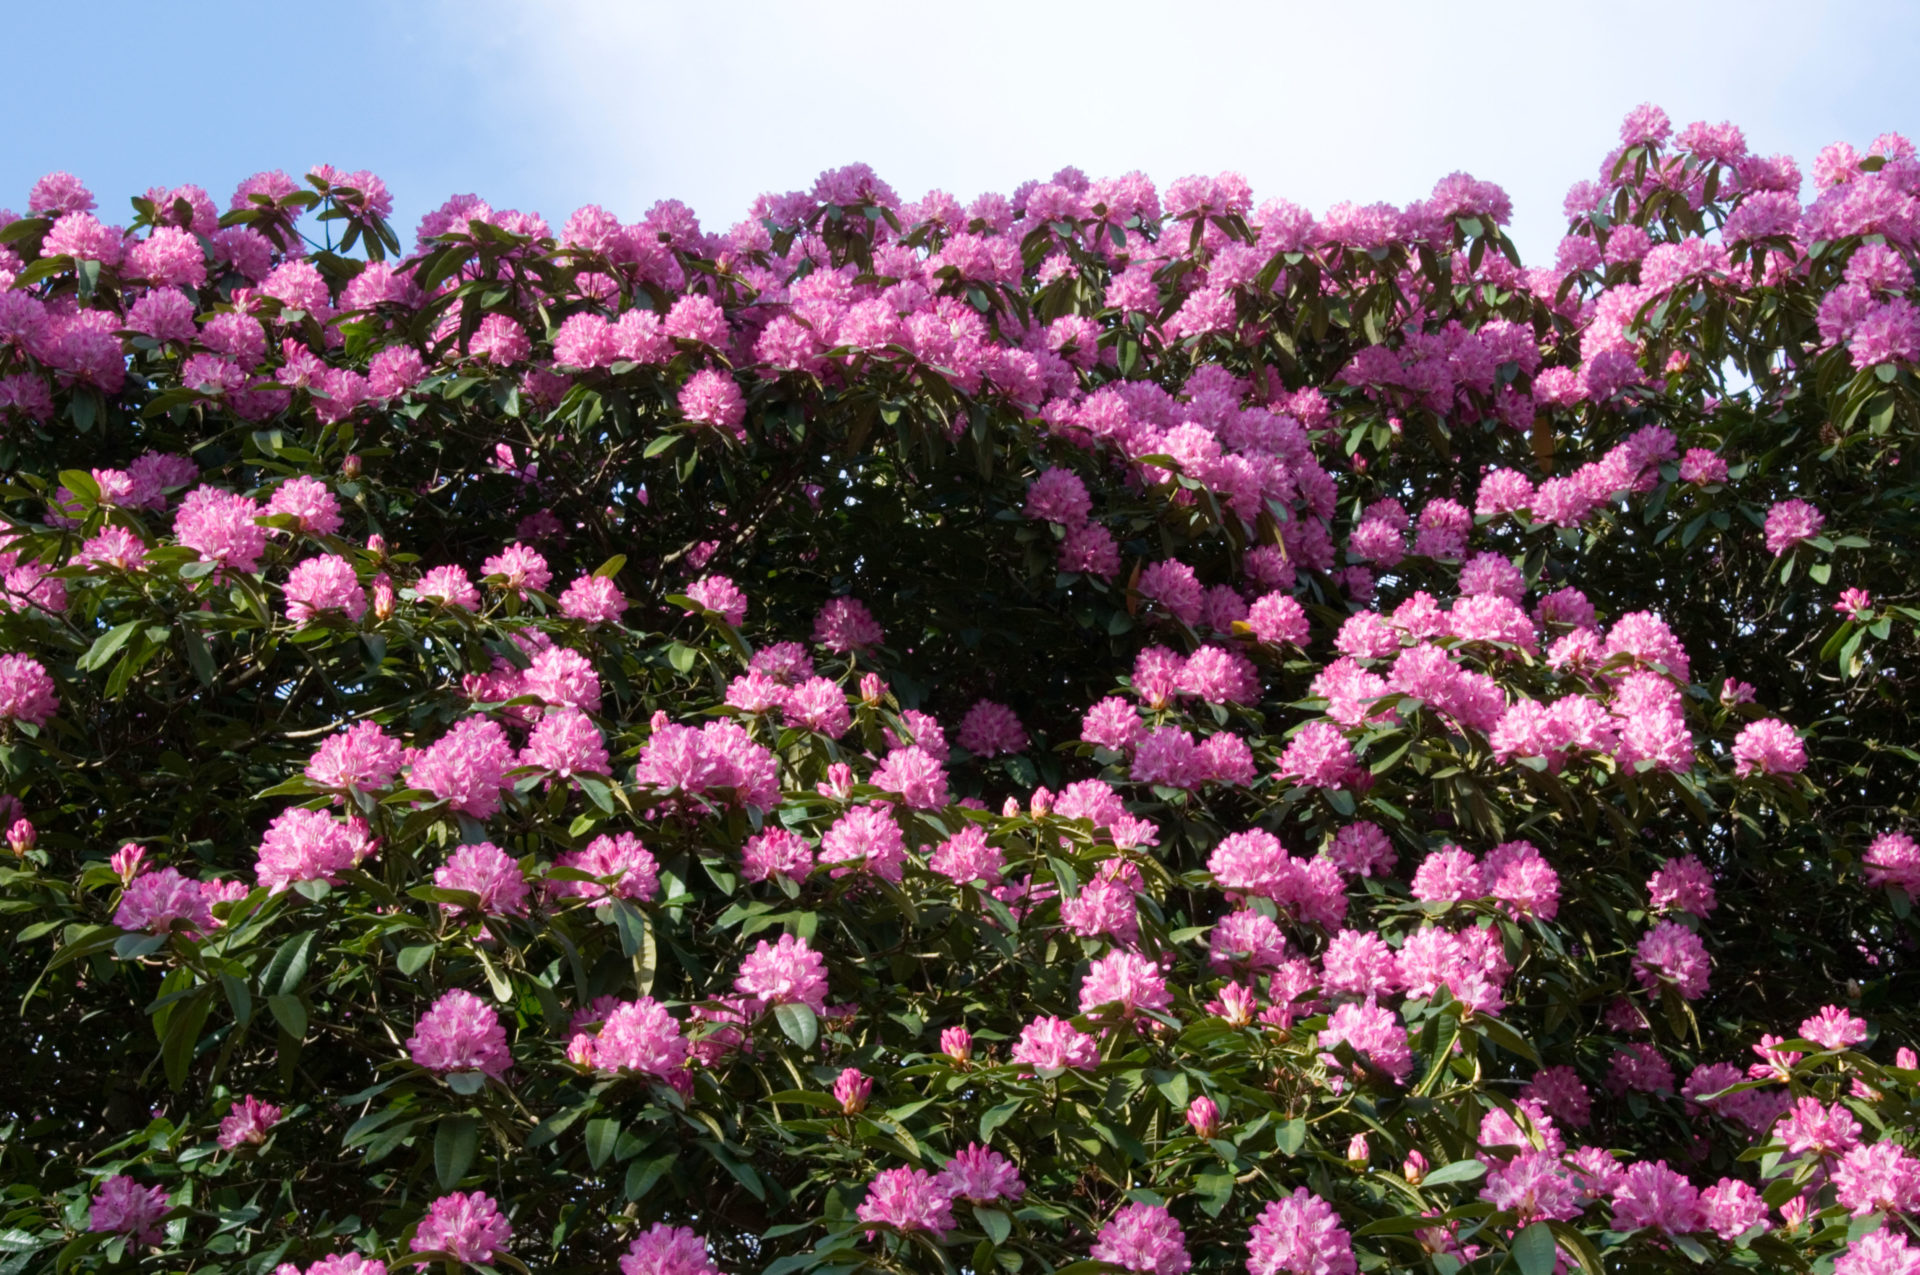 Rhododendron bush in flower 